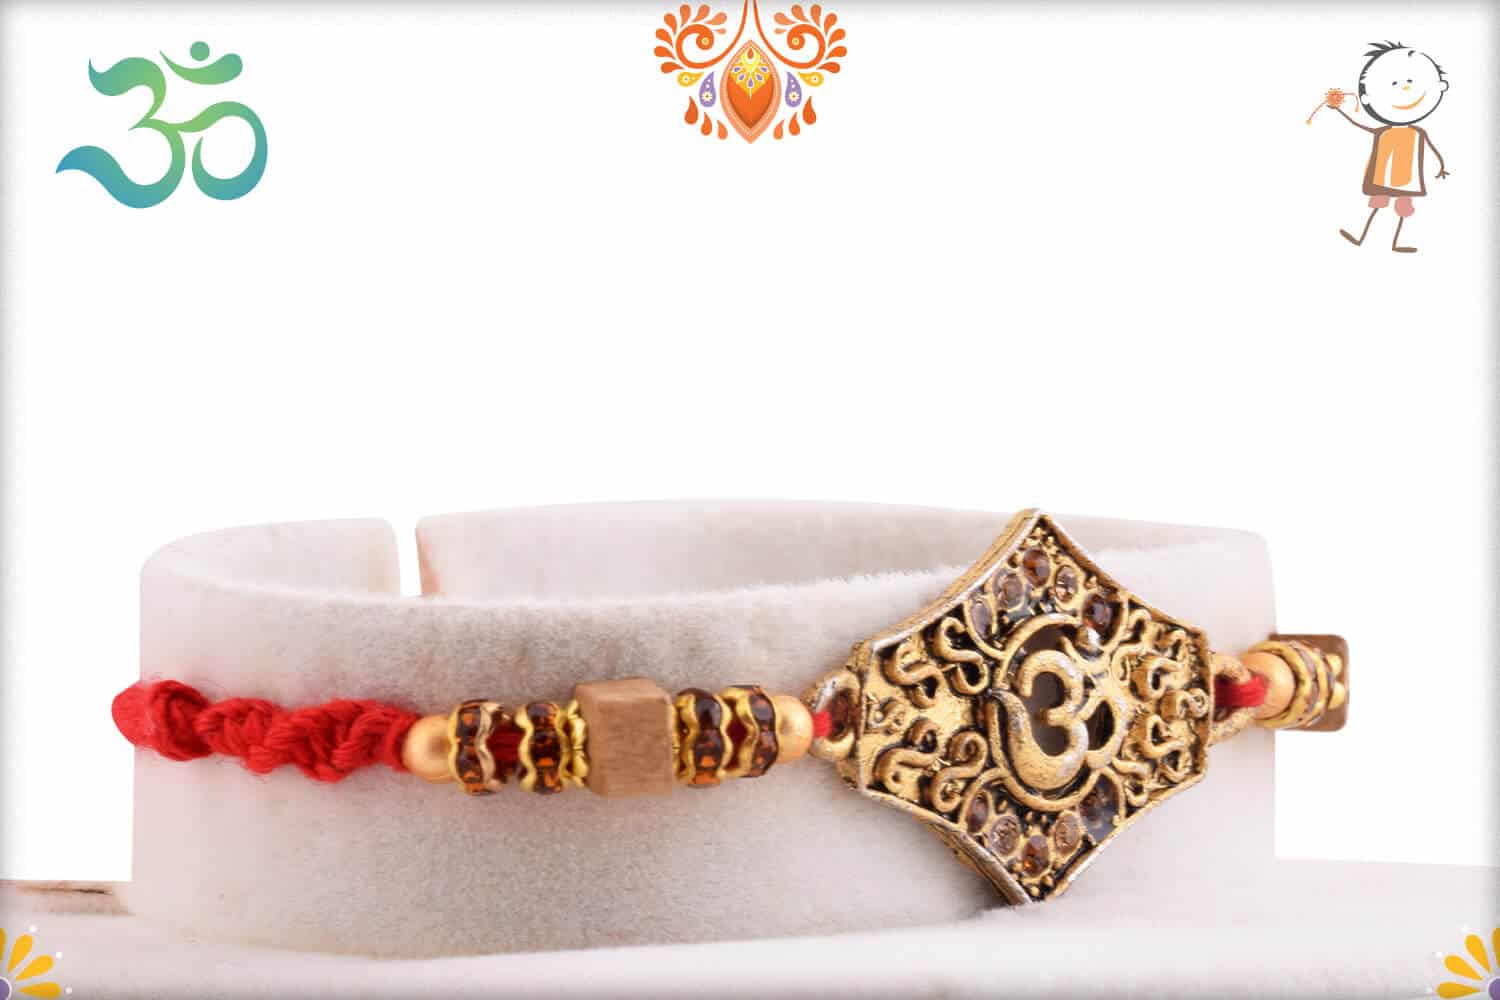 Auspicious OM Diamond Rakhi with Square Sandalwood Beads | Send Rakhi Gifts Online 2